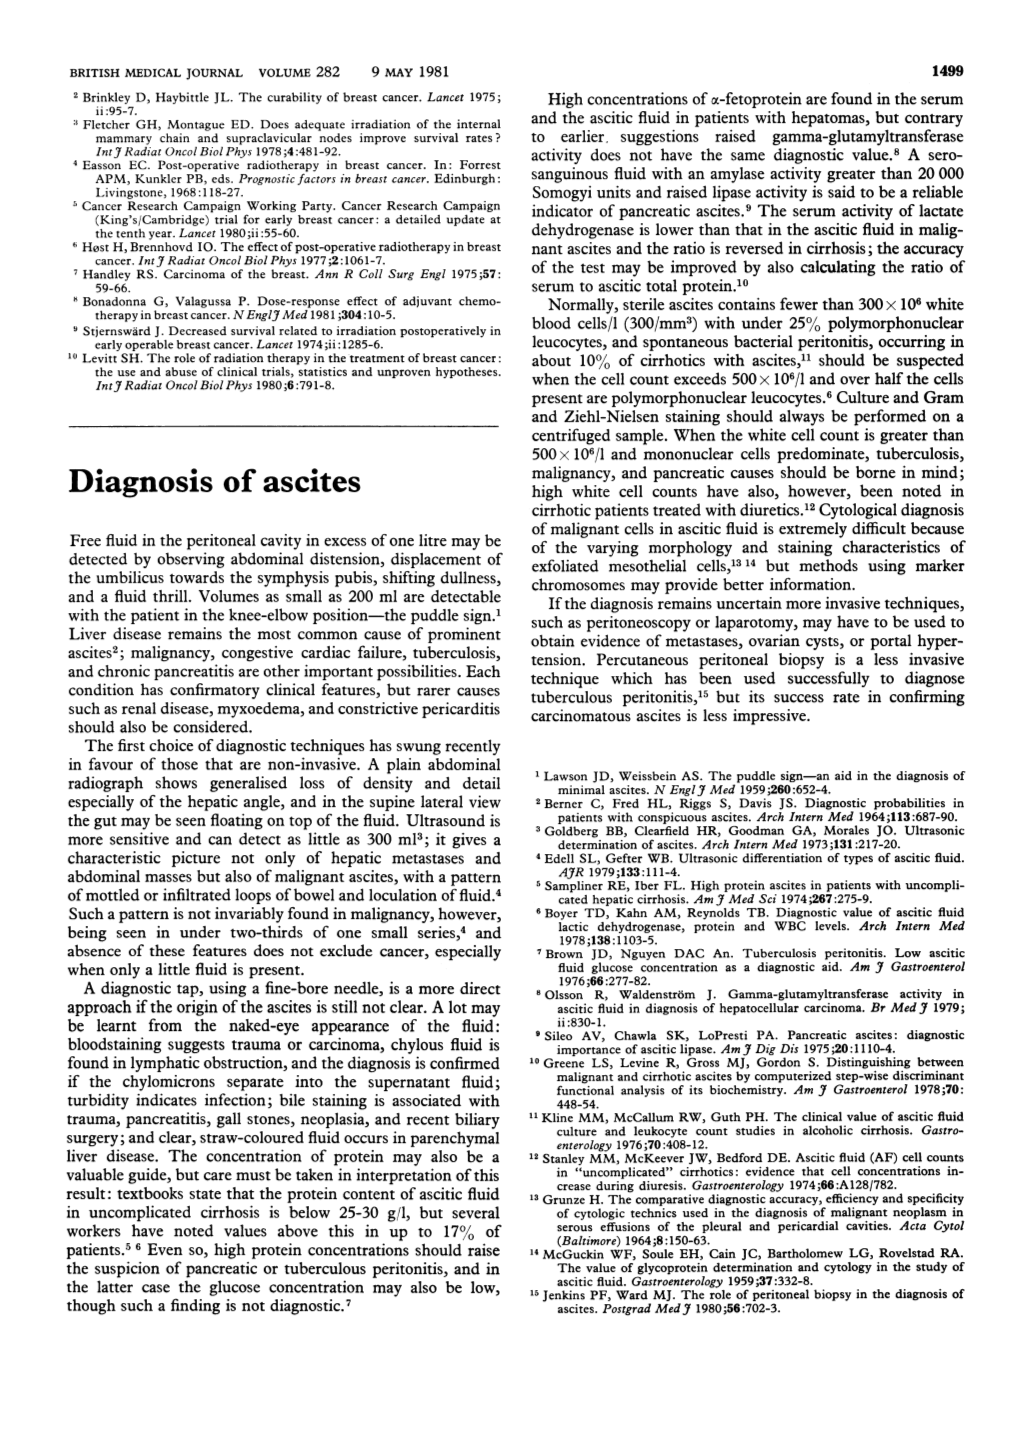 Diagnosis of Ascites